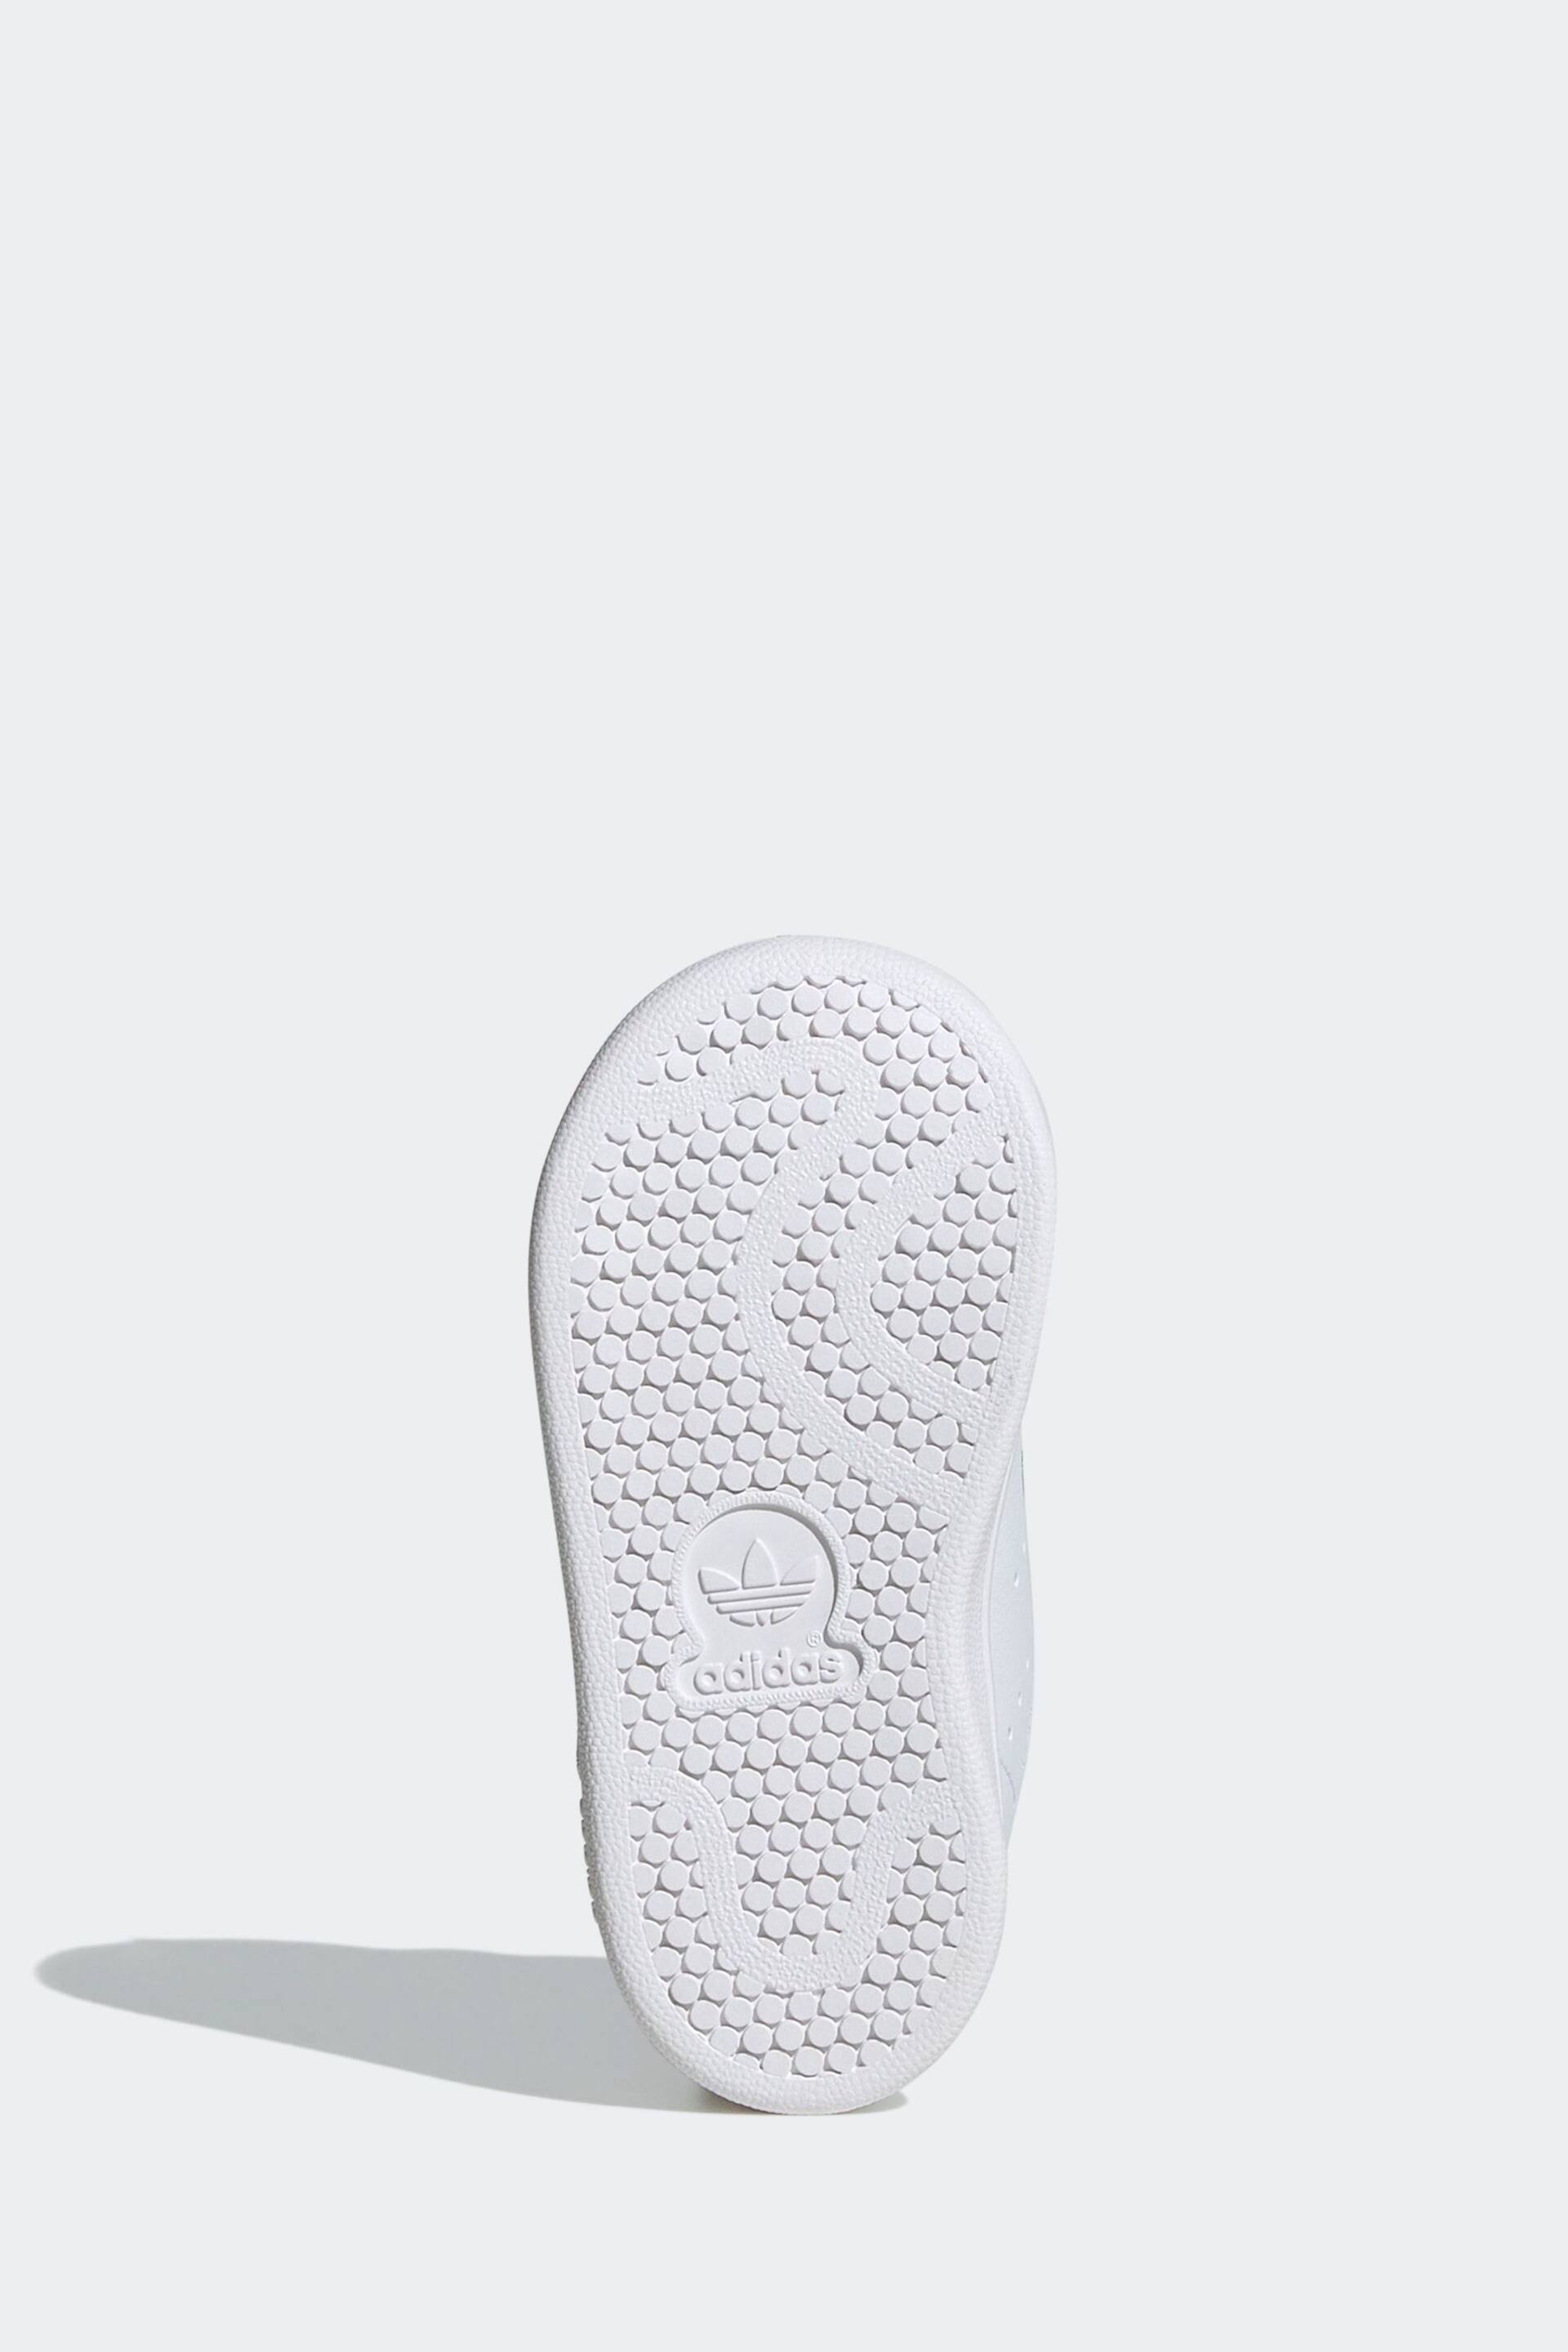 adidas Originals Stan Smith Comfort Closure White Trainers - Image 6 of 7